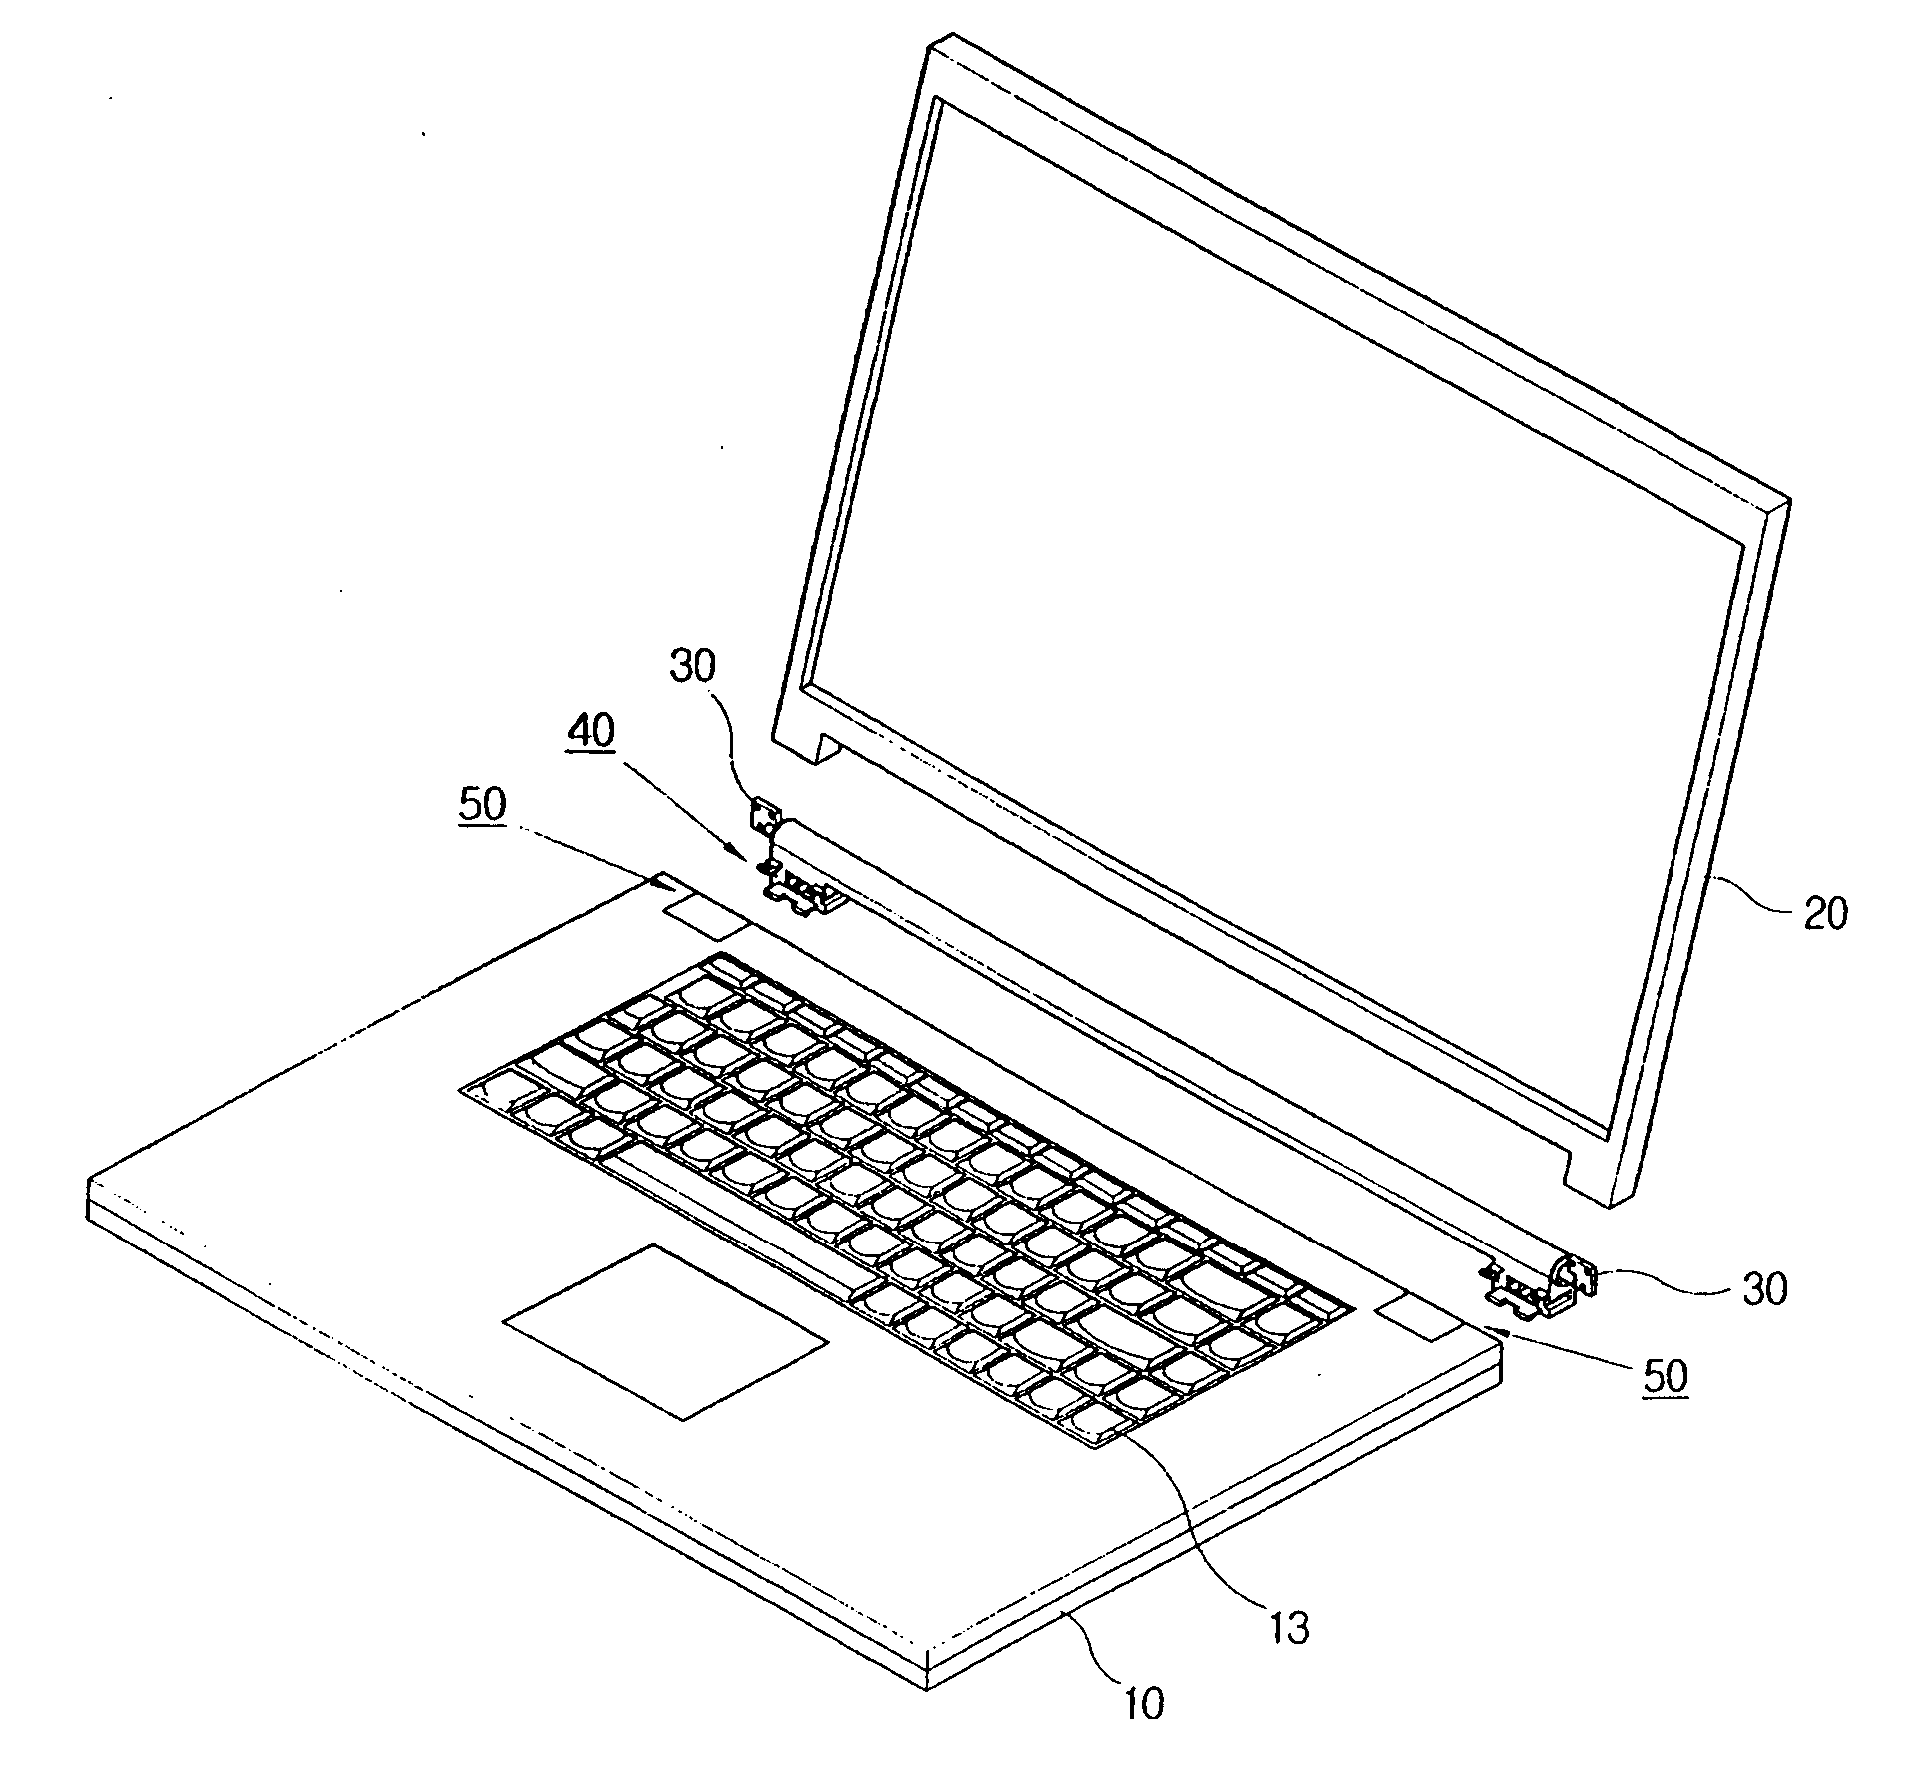 Portable computer with detachable display